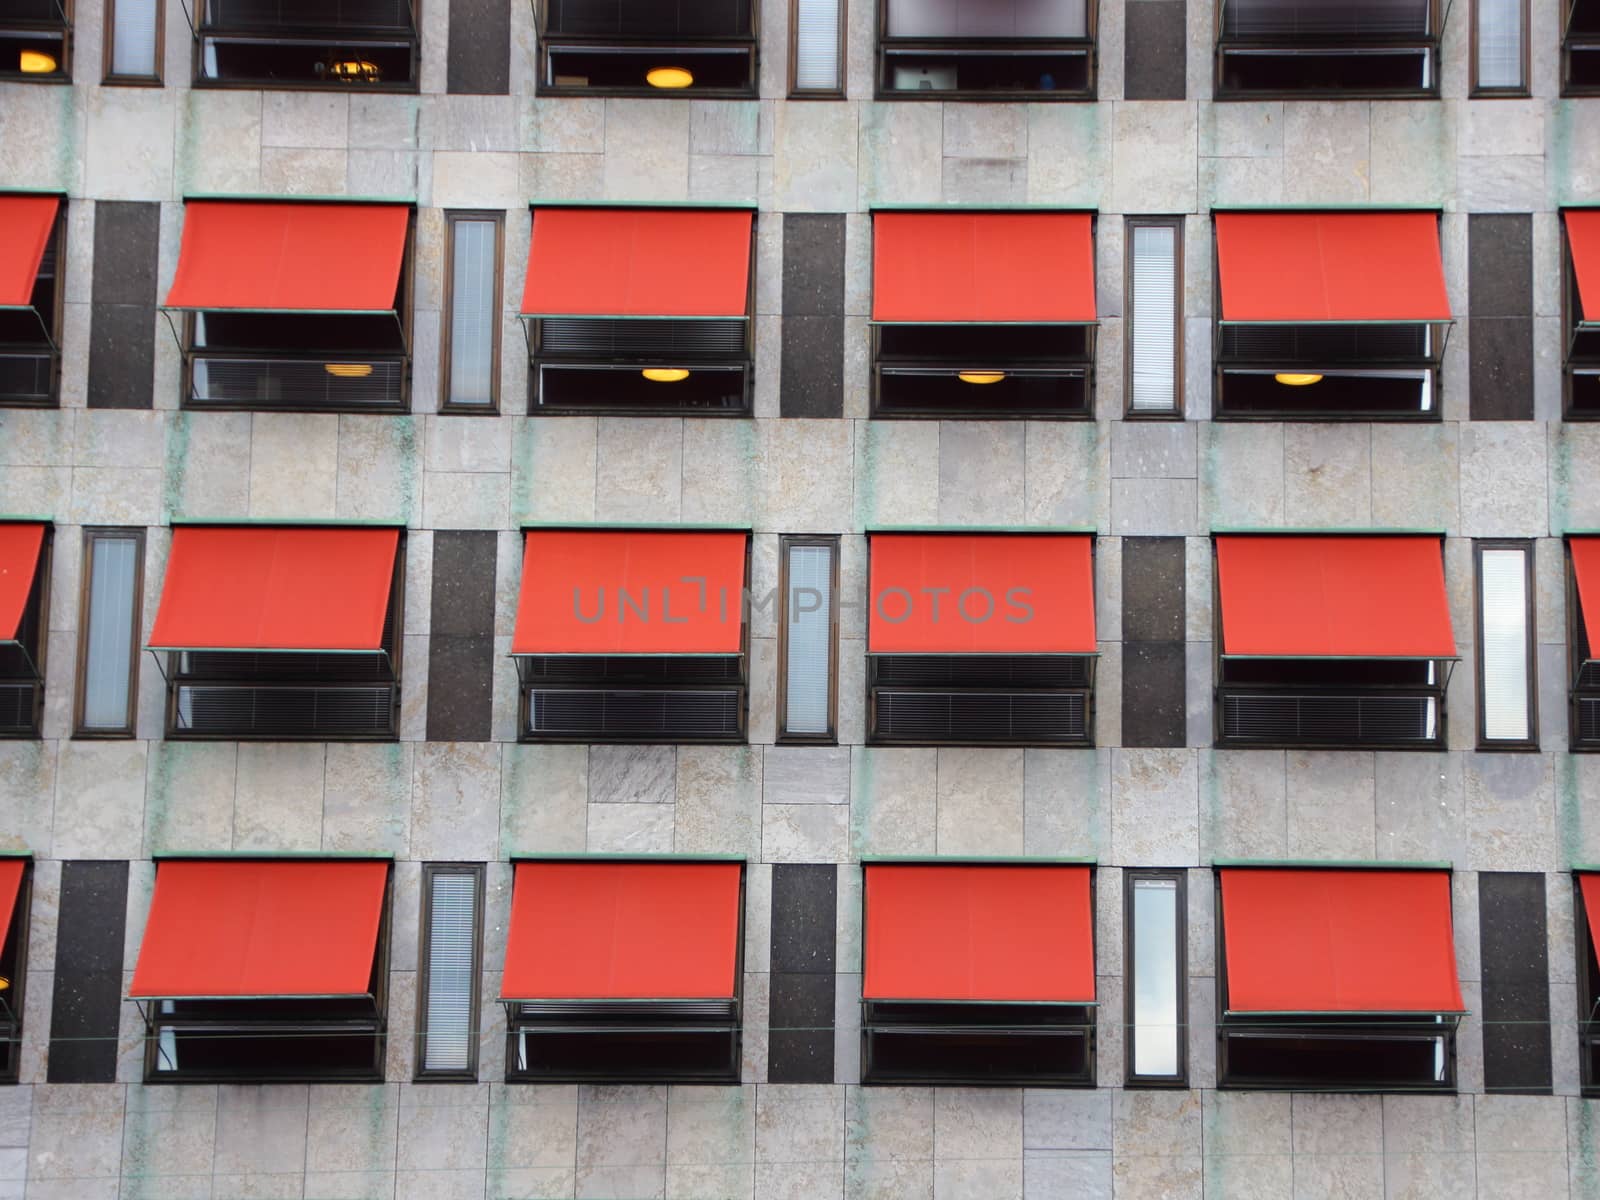 Twelve Red Sunshades on Modern Building Facade by HoleInTheBox